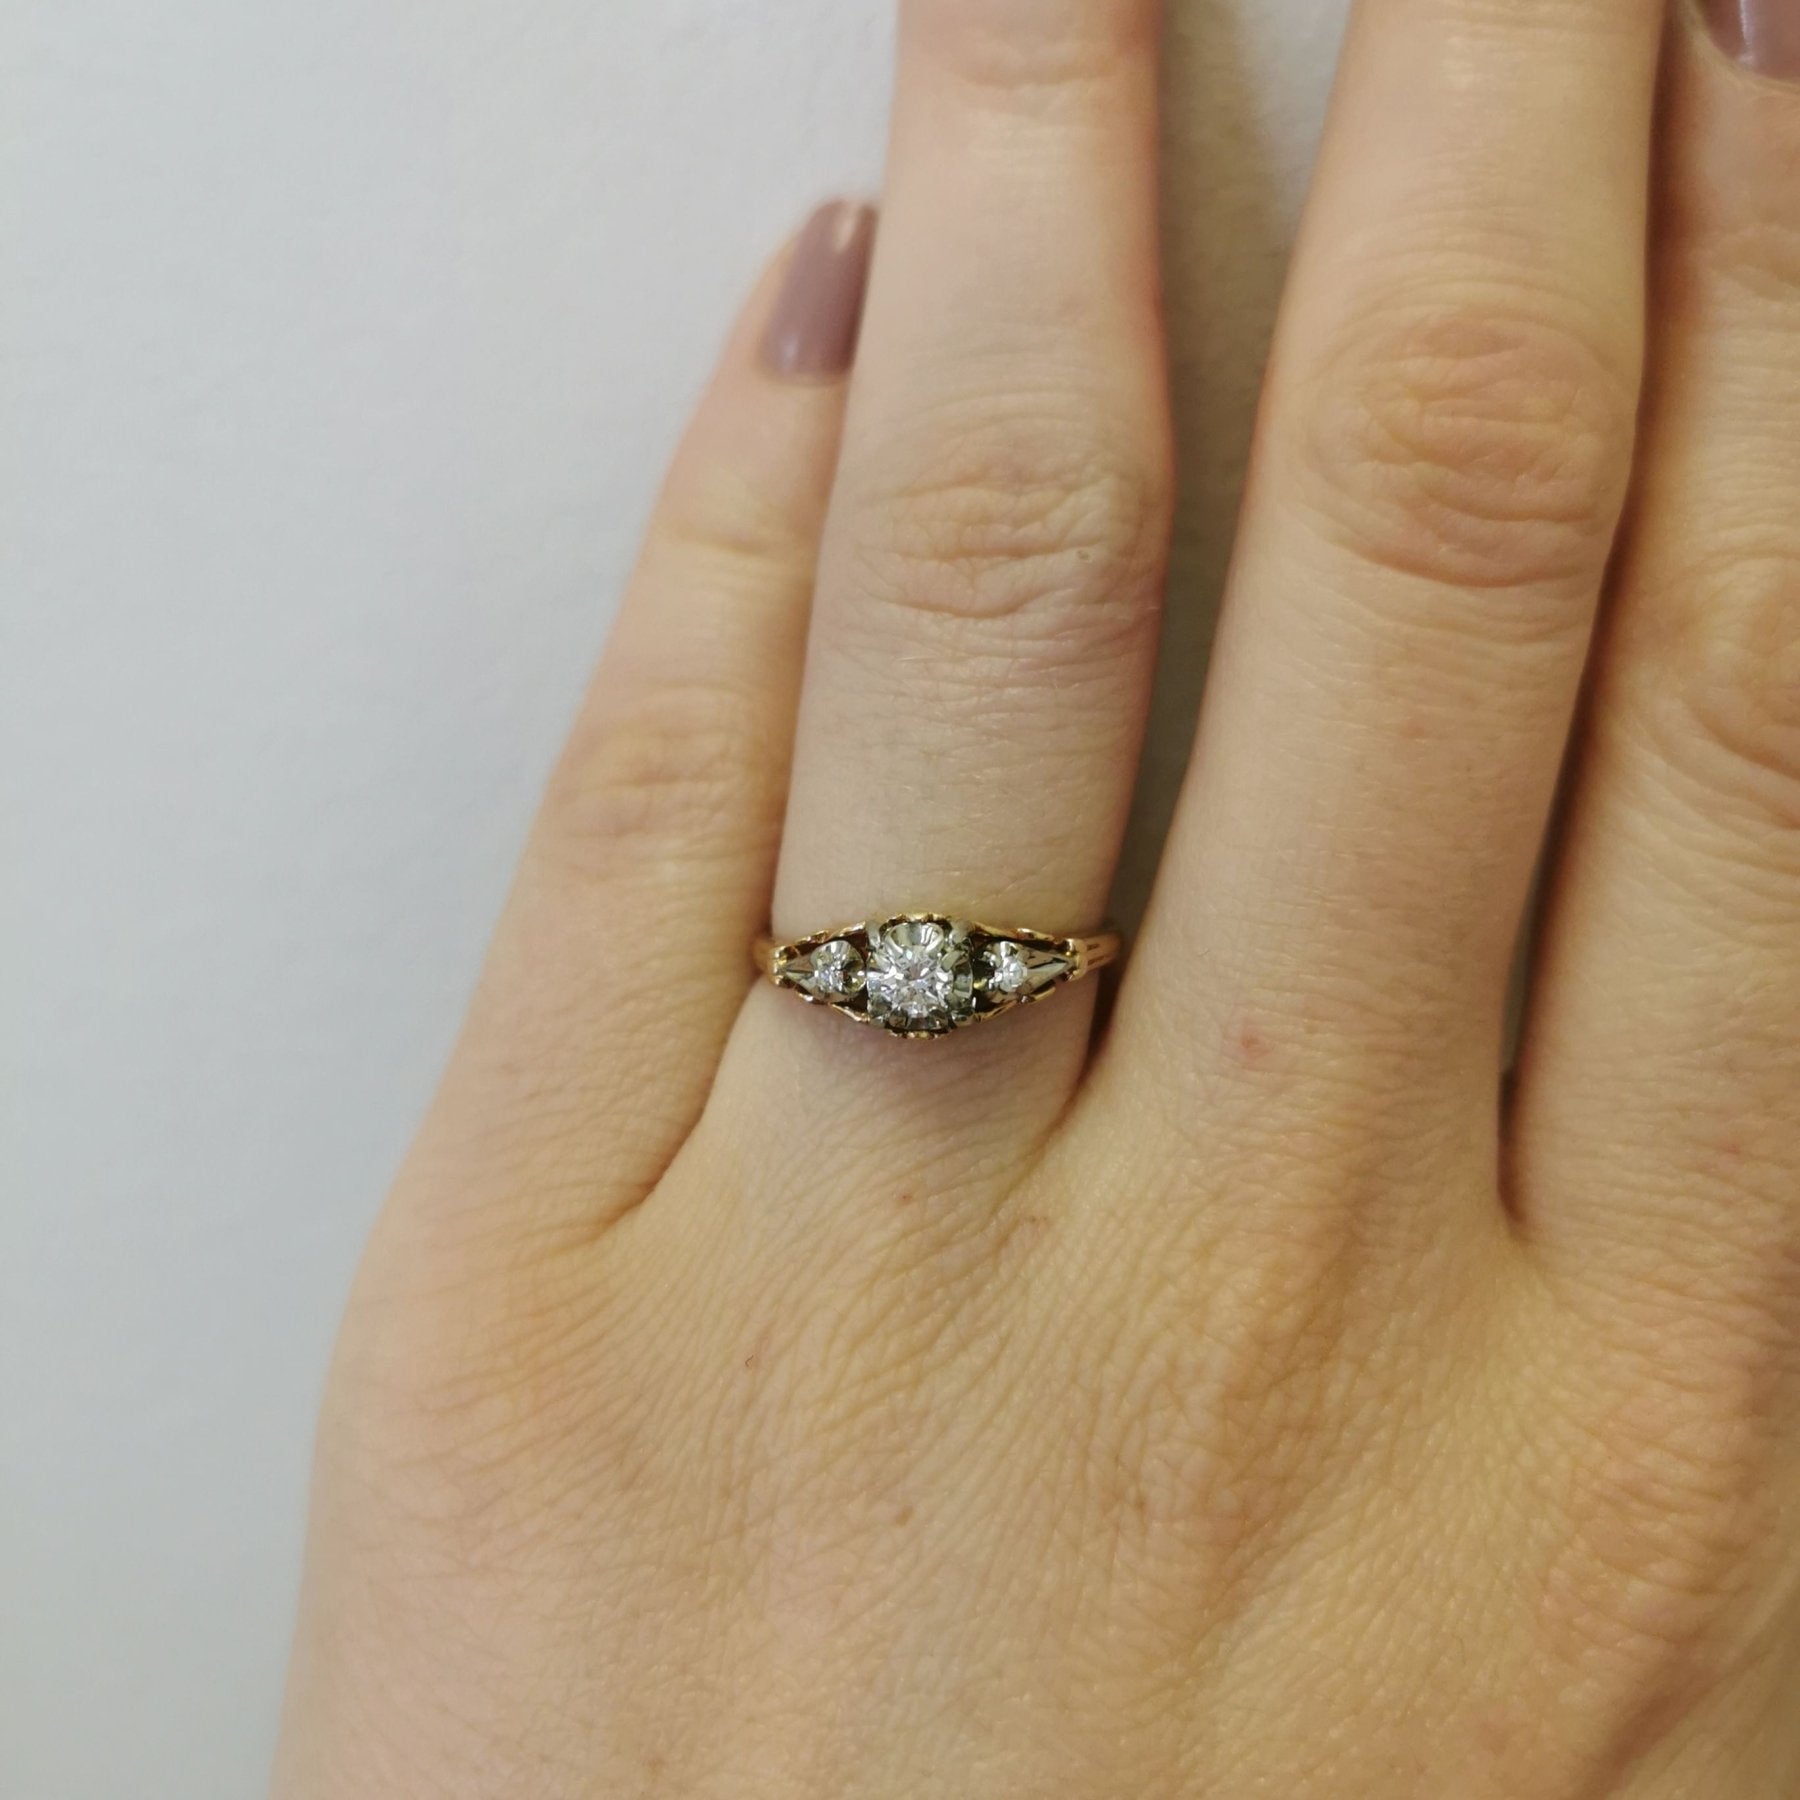 'Birks' 1940s Three Stone Diamond Ring | 0.17ctw | SZ 7.5 | - 100 Ways